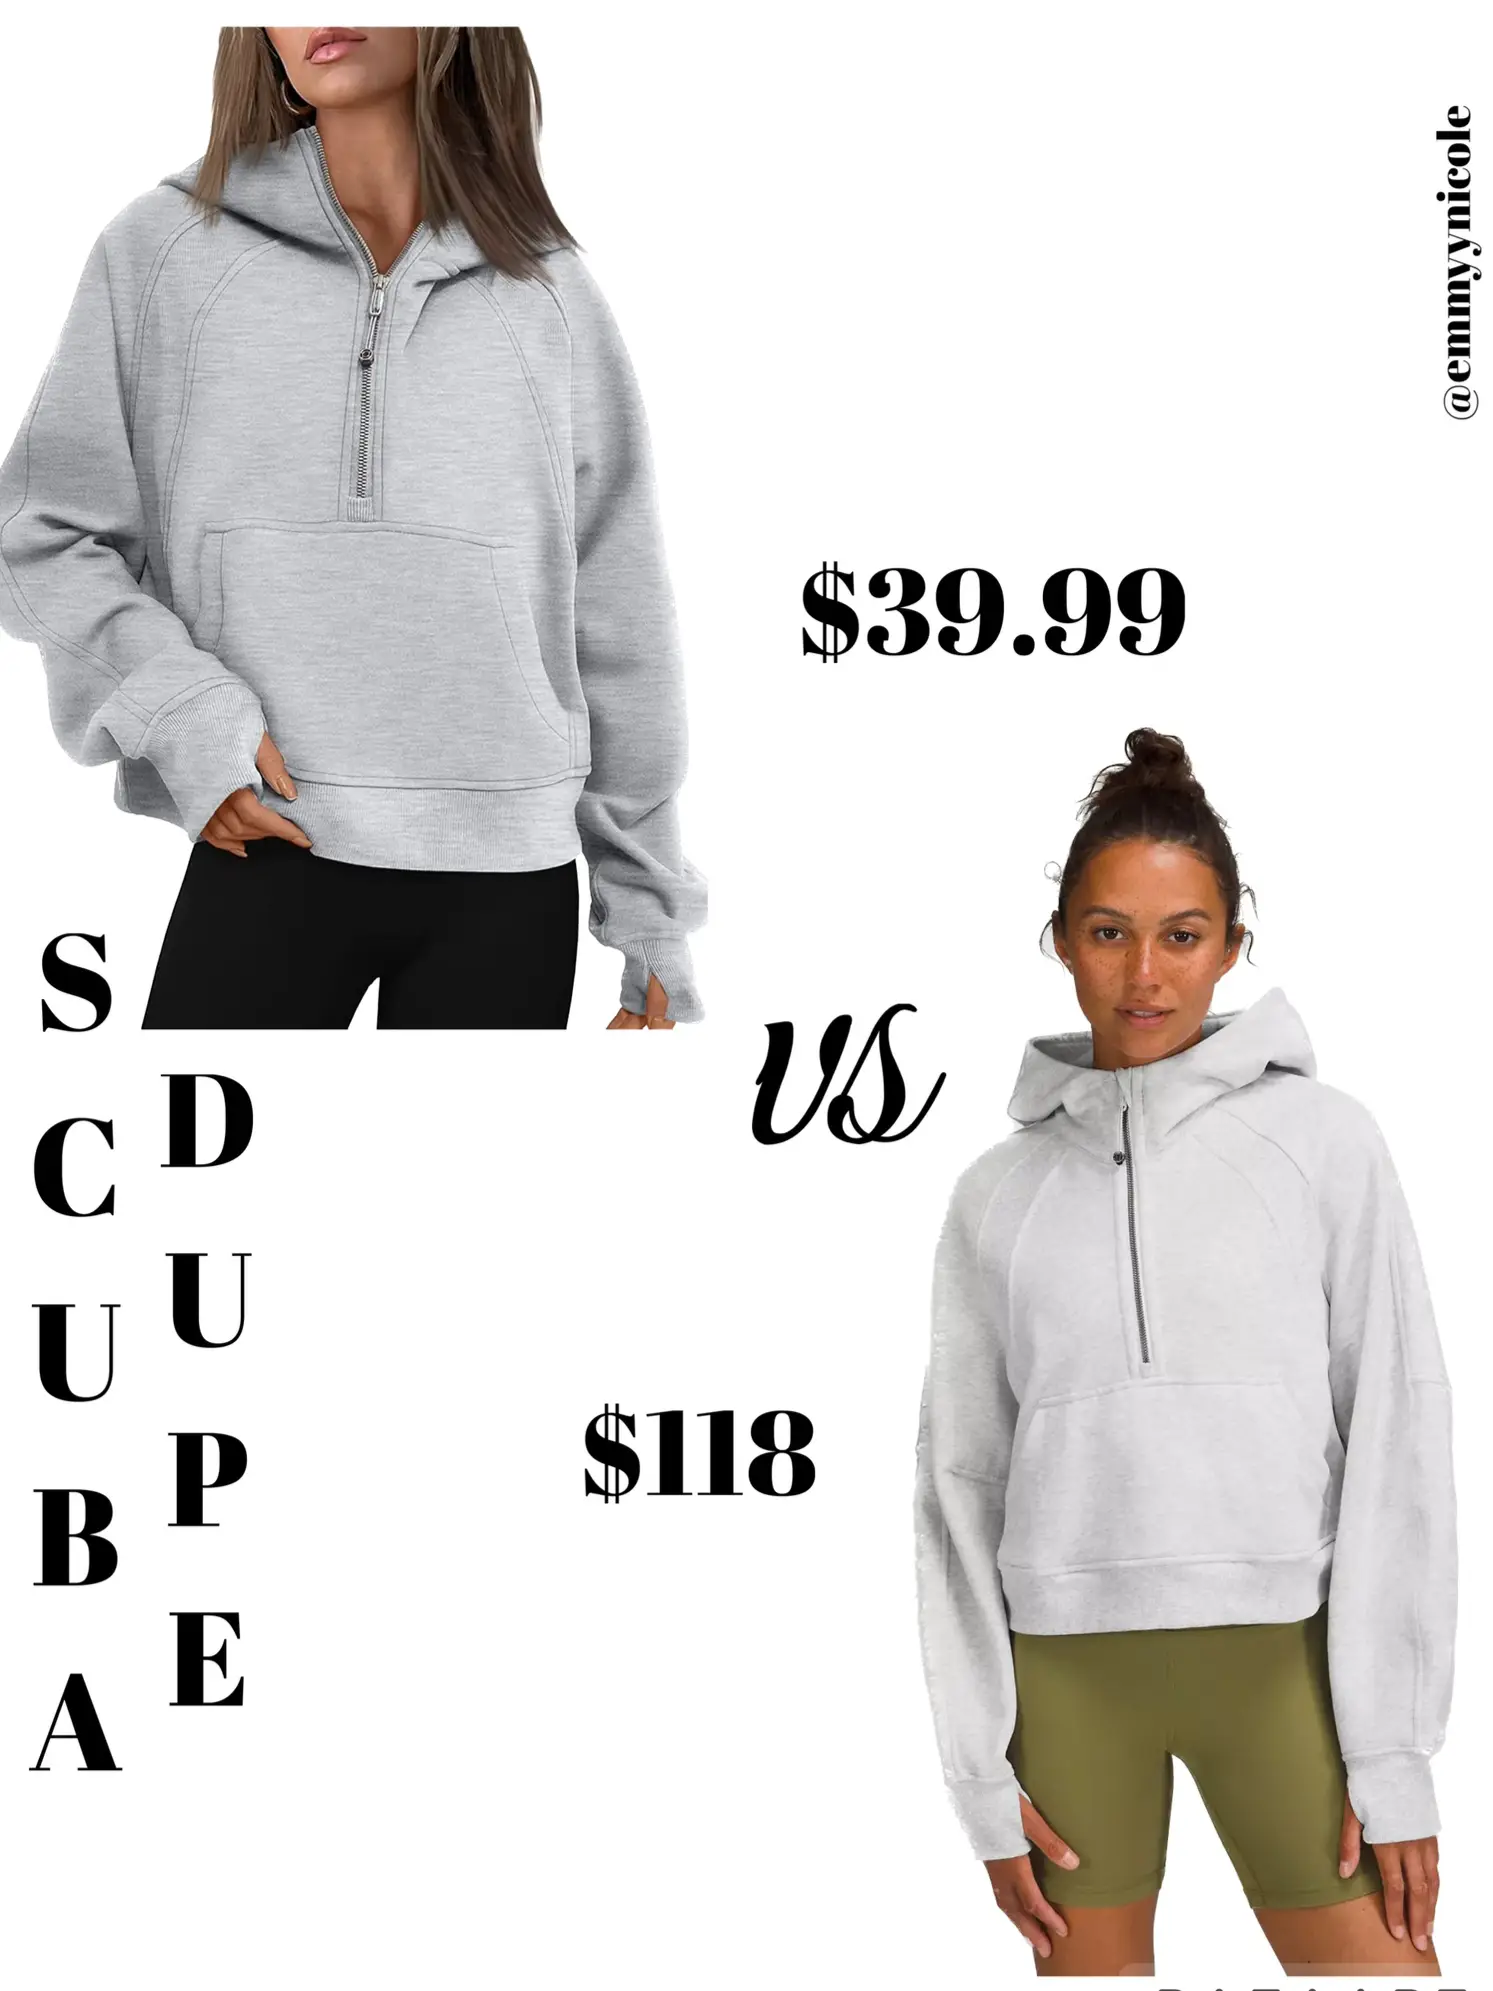 1/2 zip scuba hoodie dupe? budget friendly option, if you like the